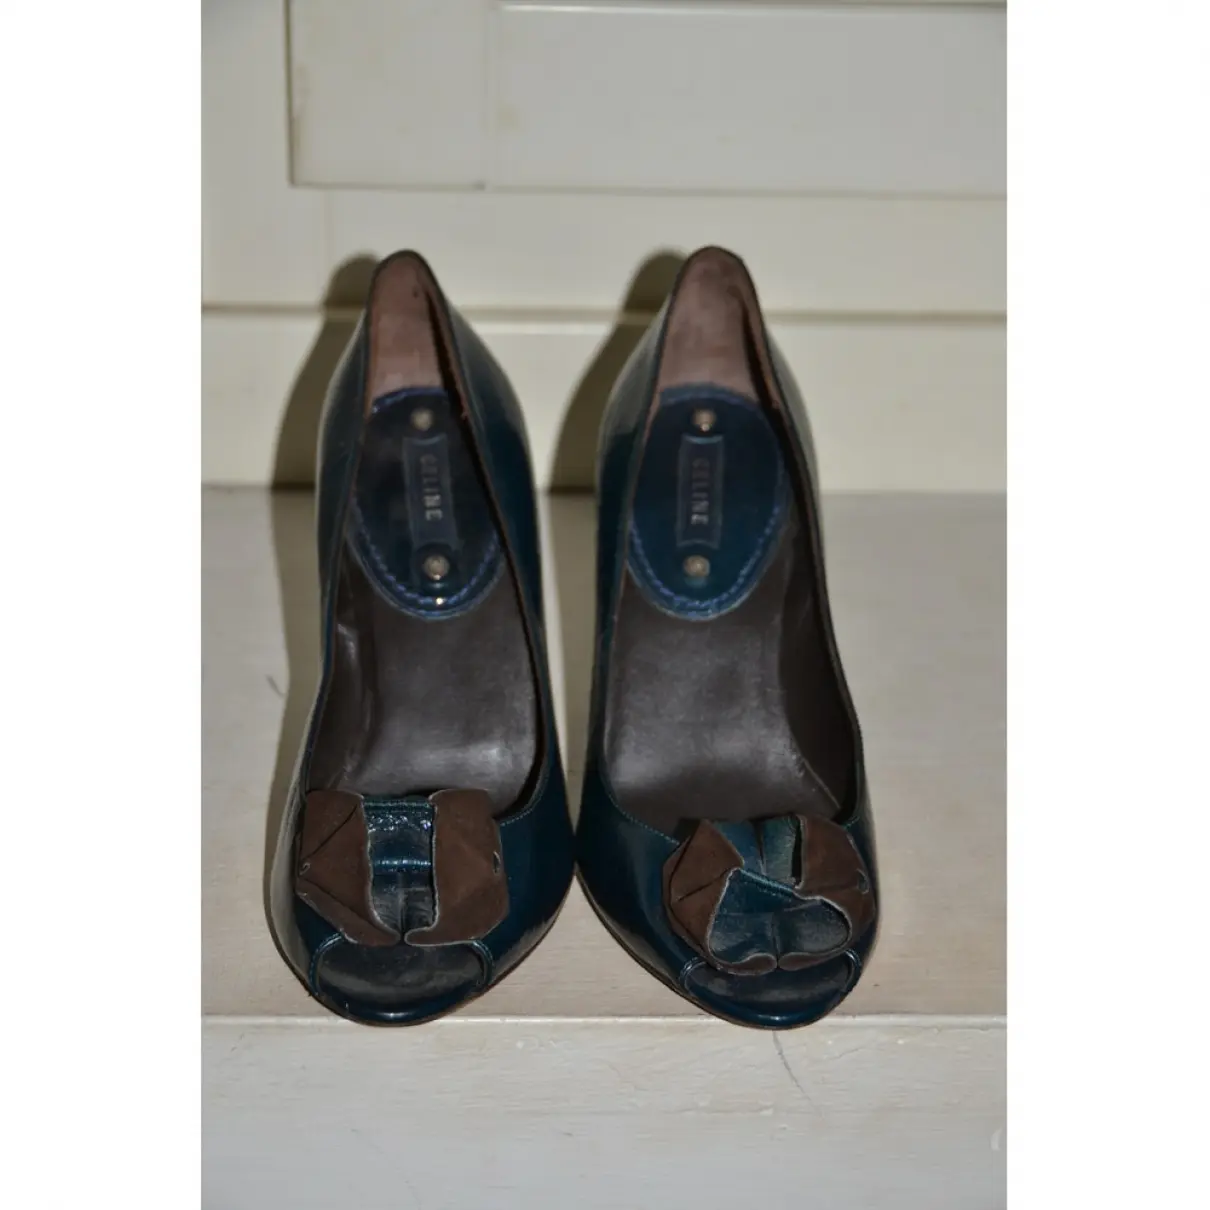 Buy Celine Patent leather heels online